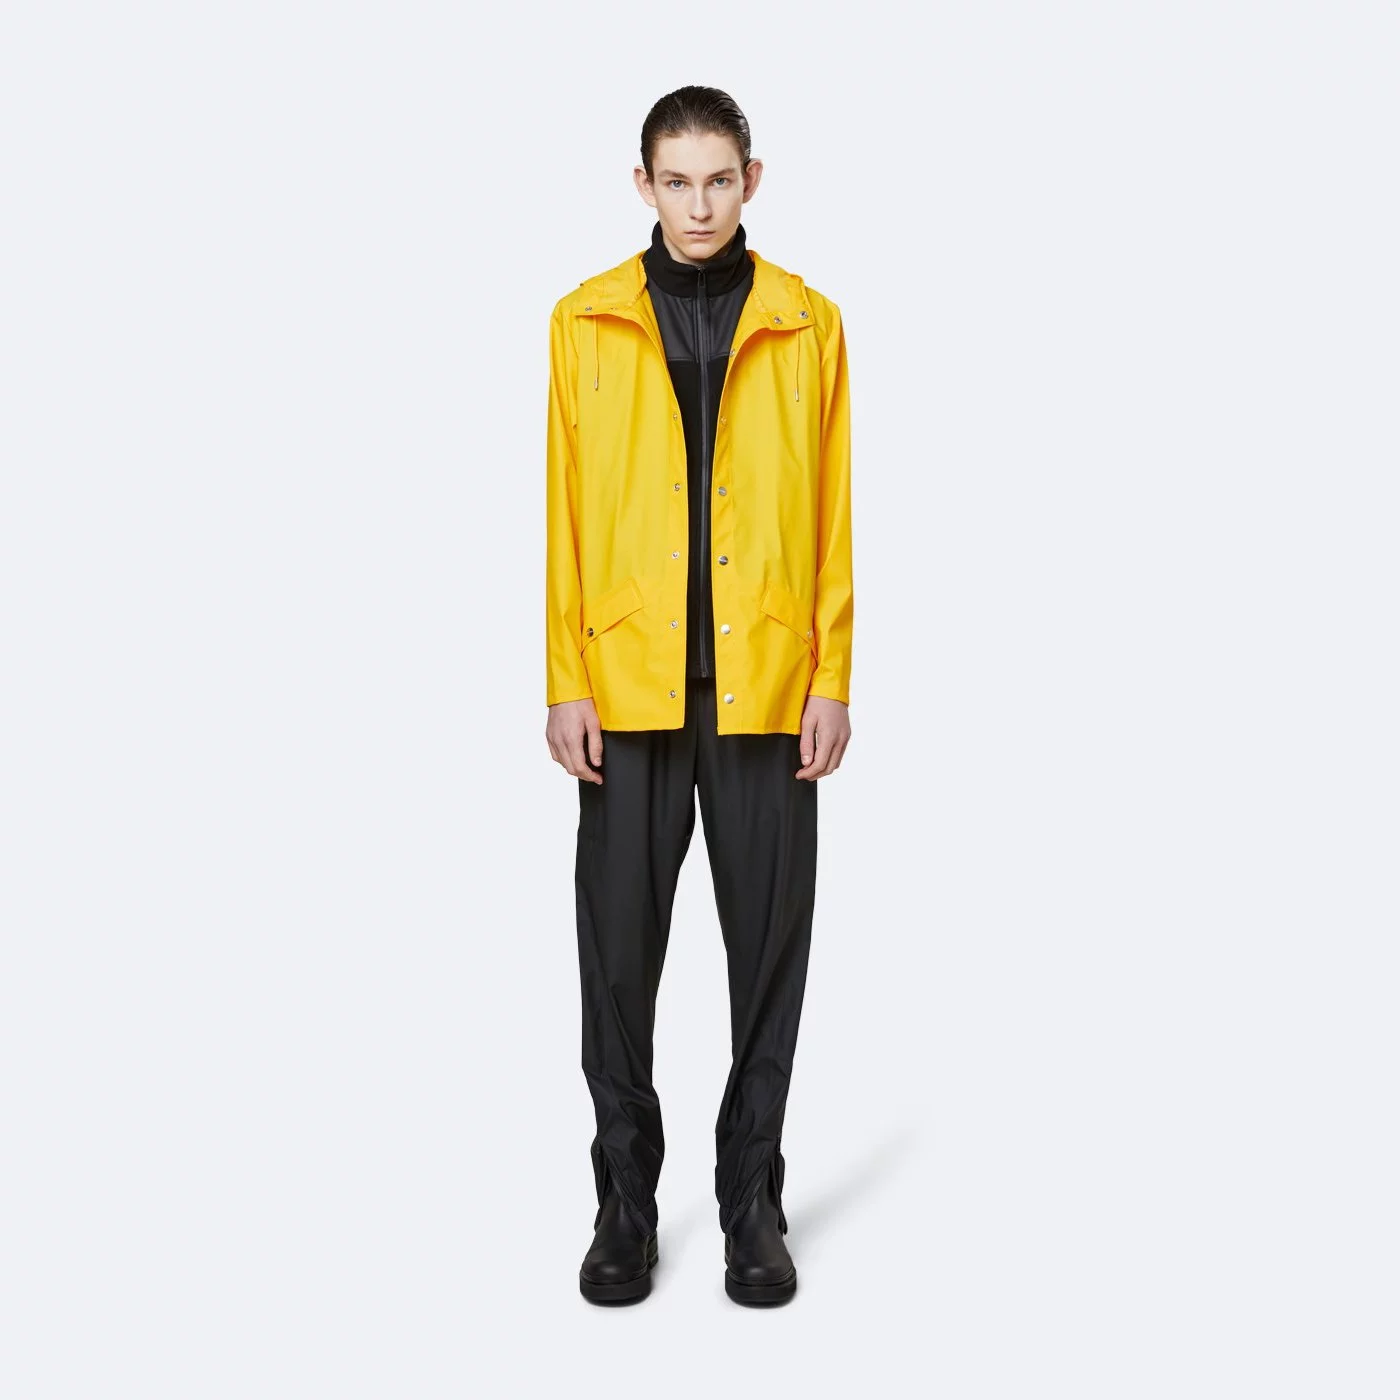 Pršiplášť Rains Jacket Yellow 1201-1 (S/M) (Yellow)